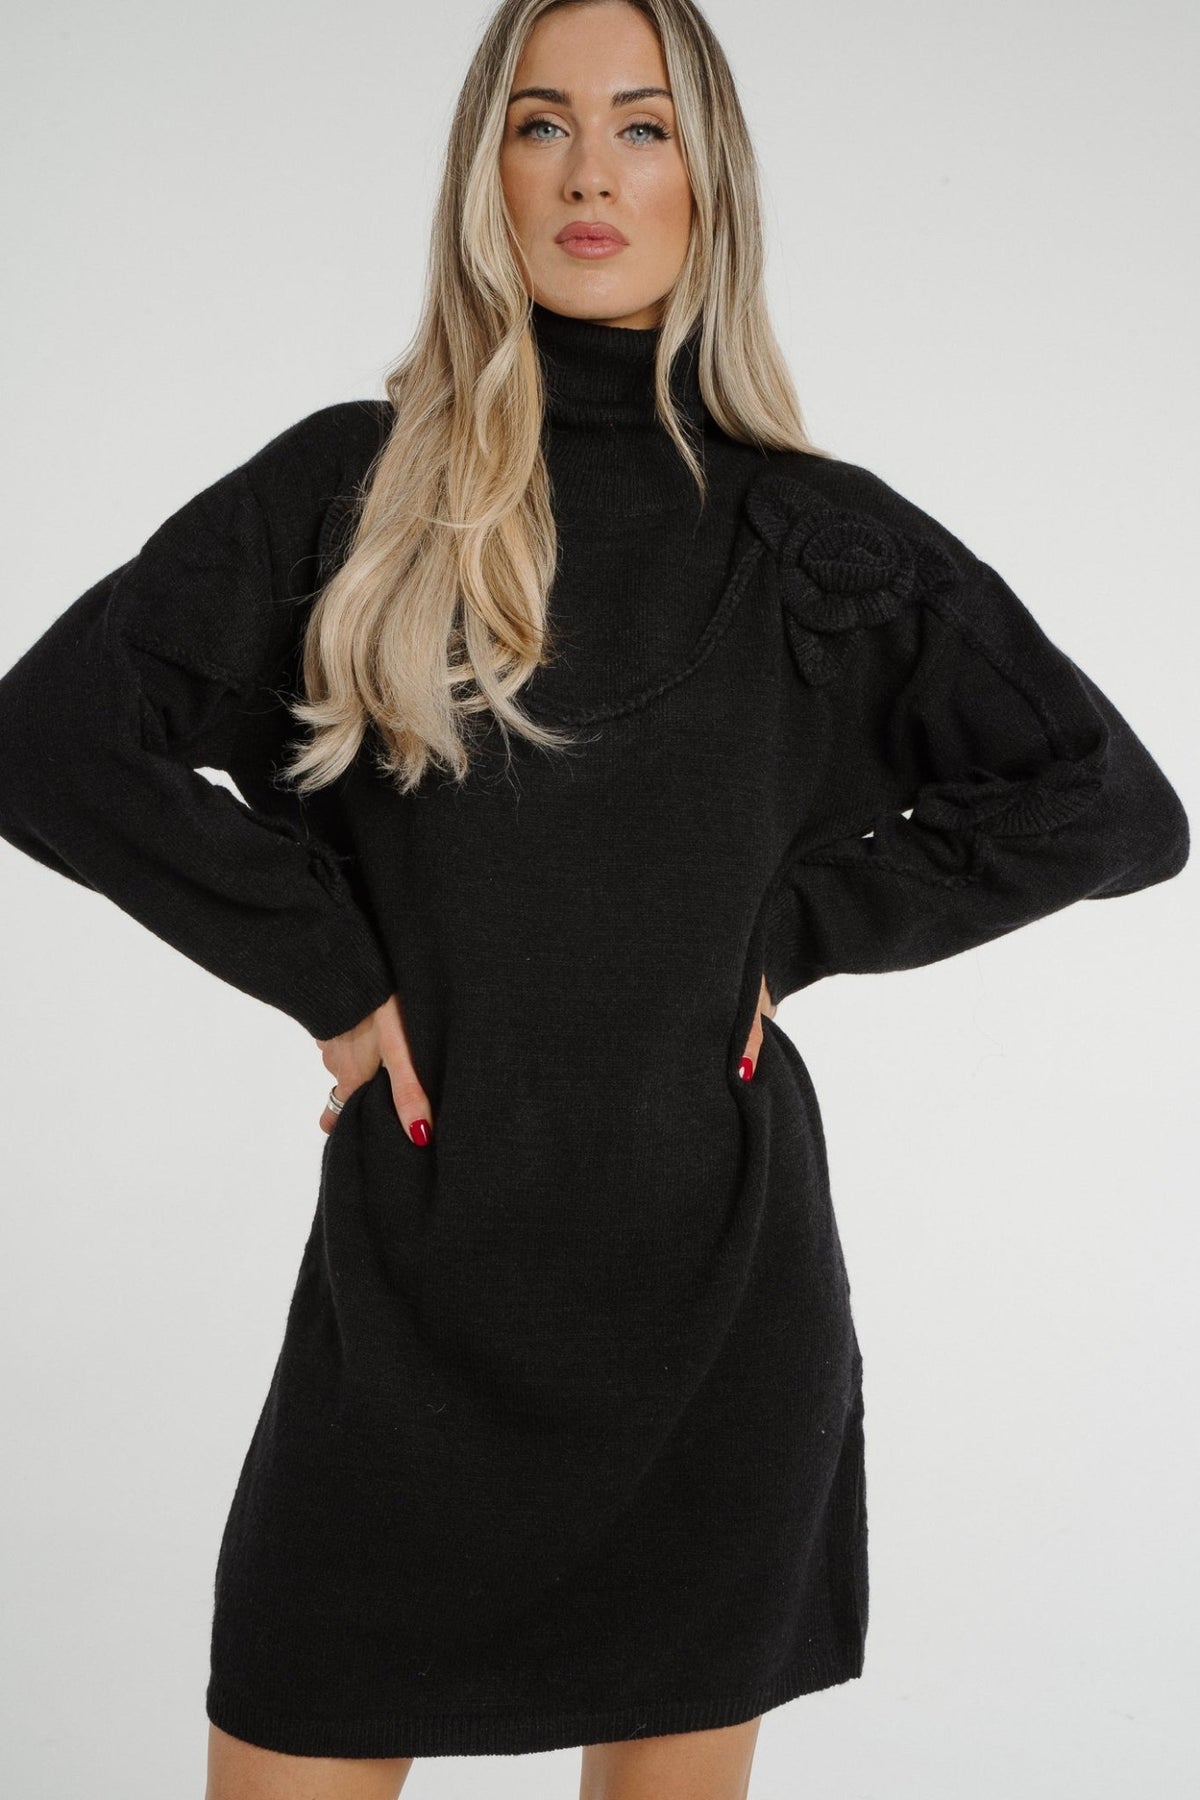 Holly Polo Neck Knit Dress In Black - The Walk in Wardrobe